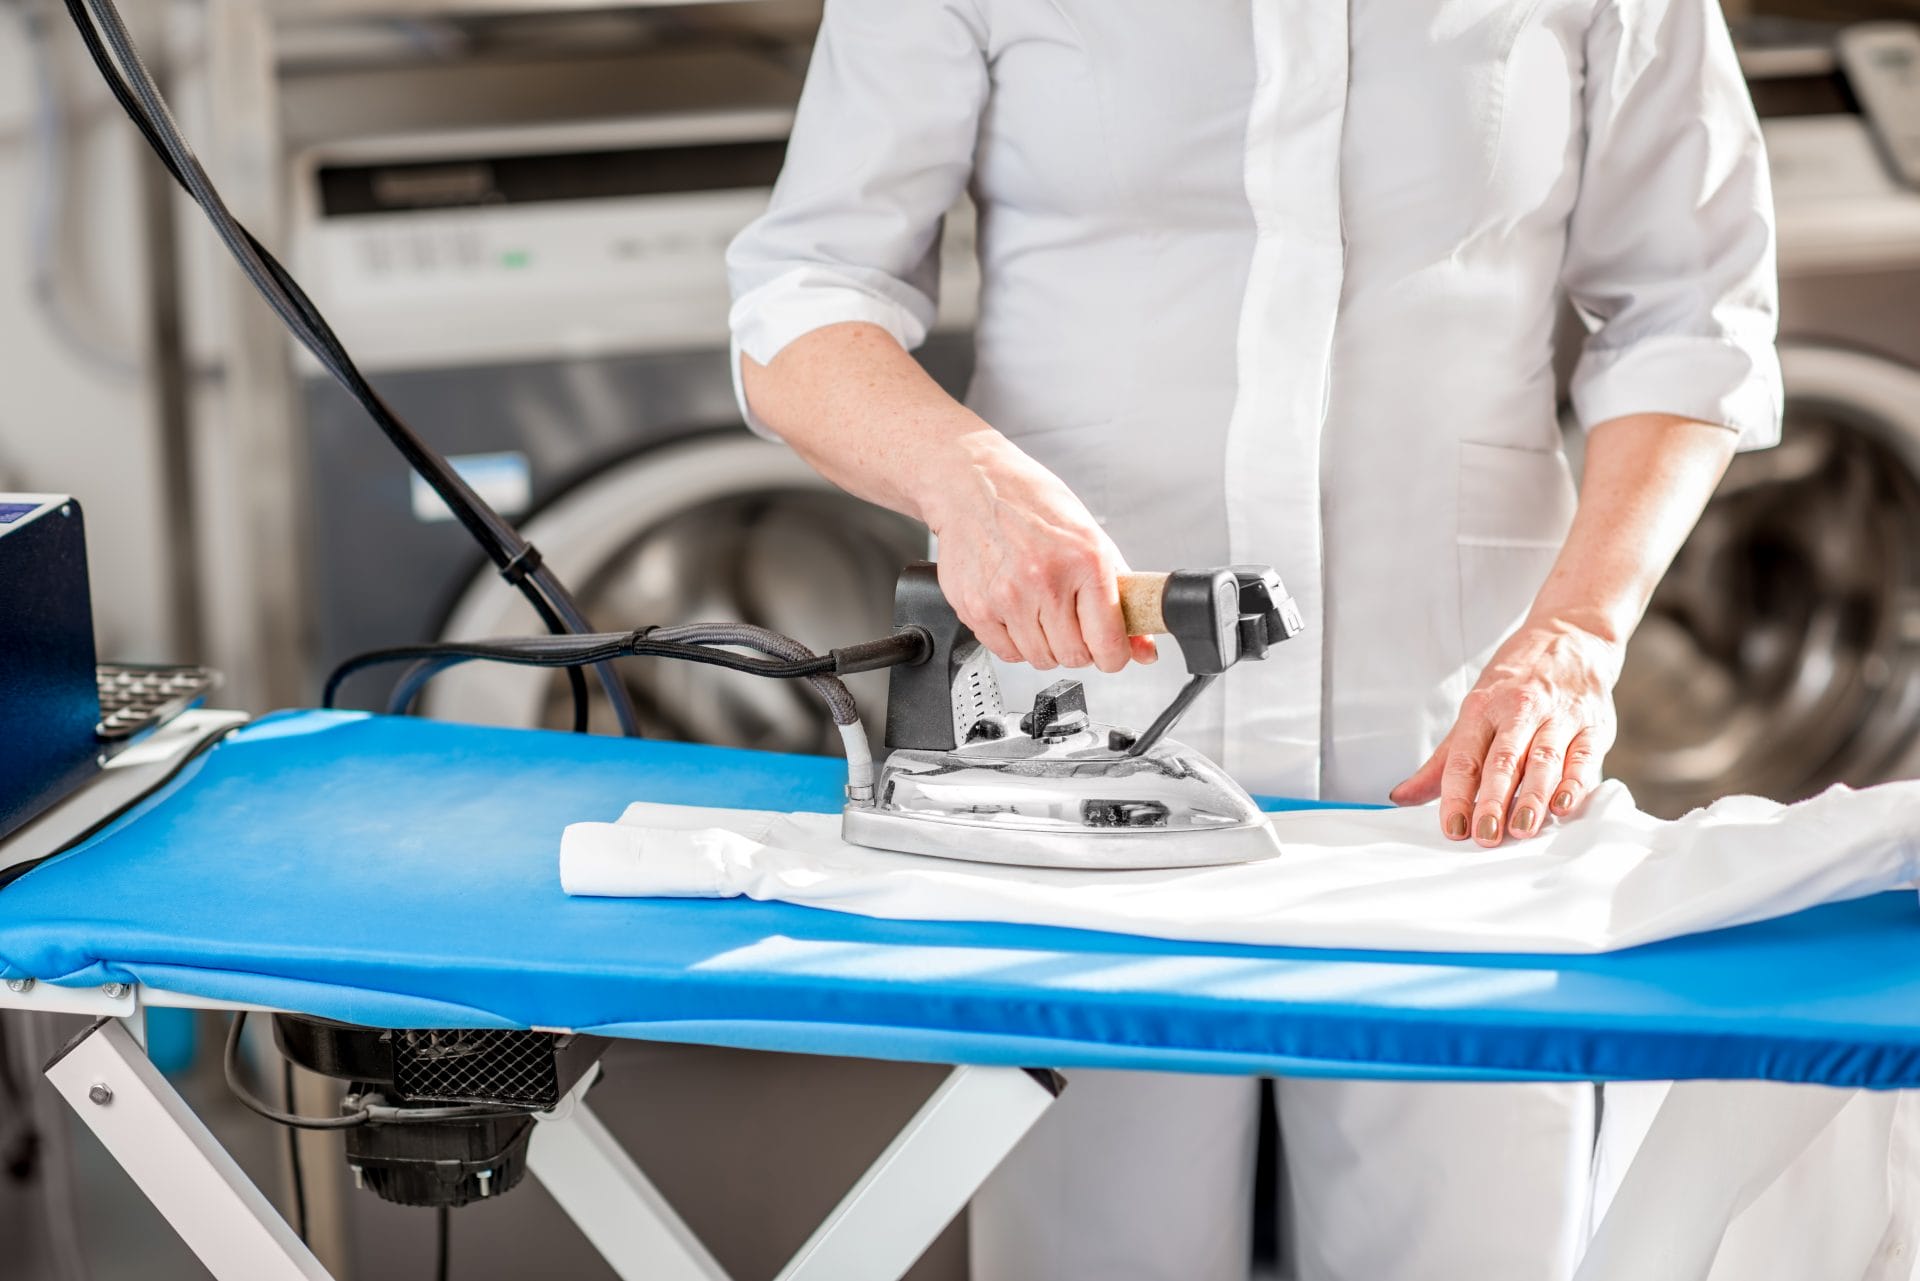 A woman ironing a shirt on an ironing board.